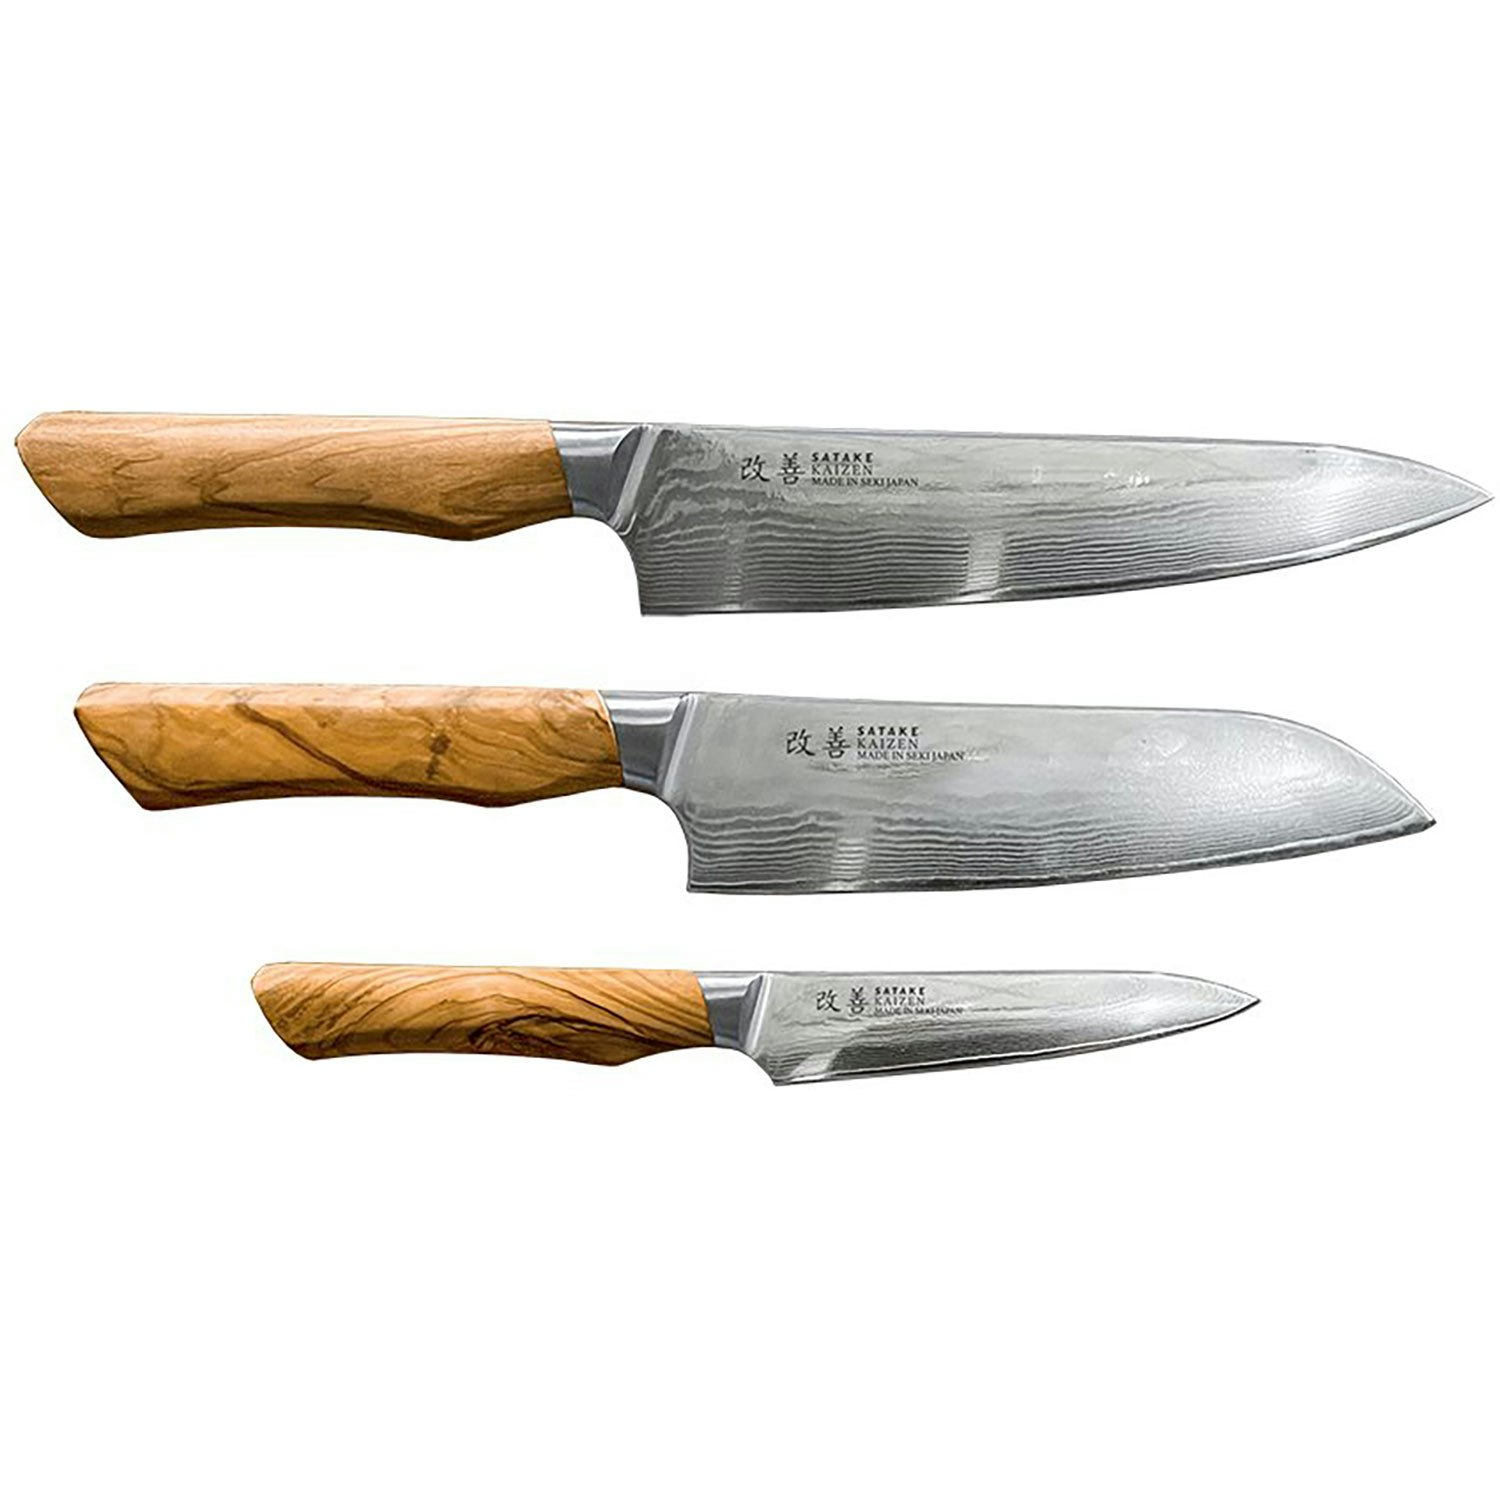 Atlantic Cut Square Chef Knife 18cm